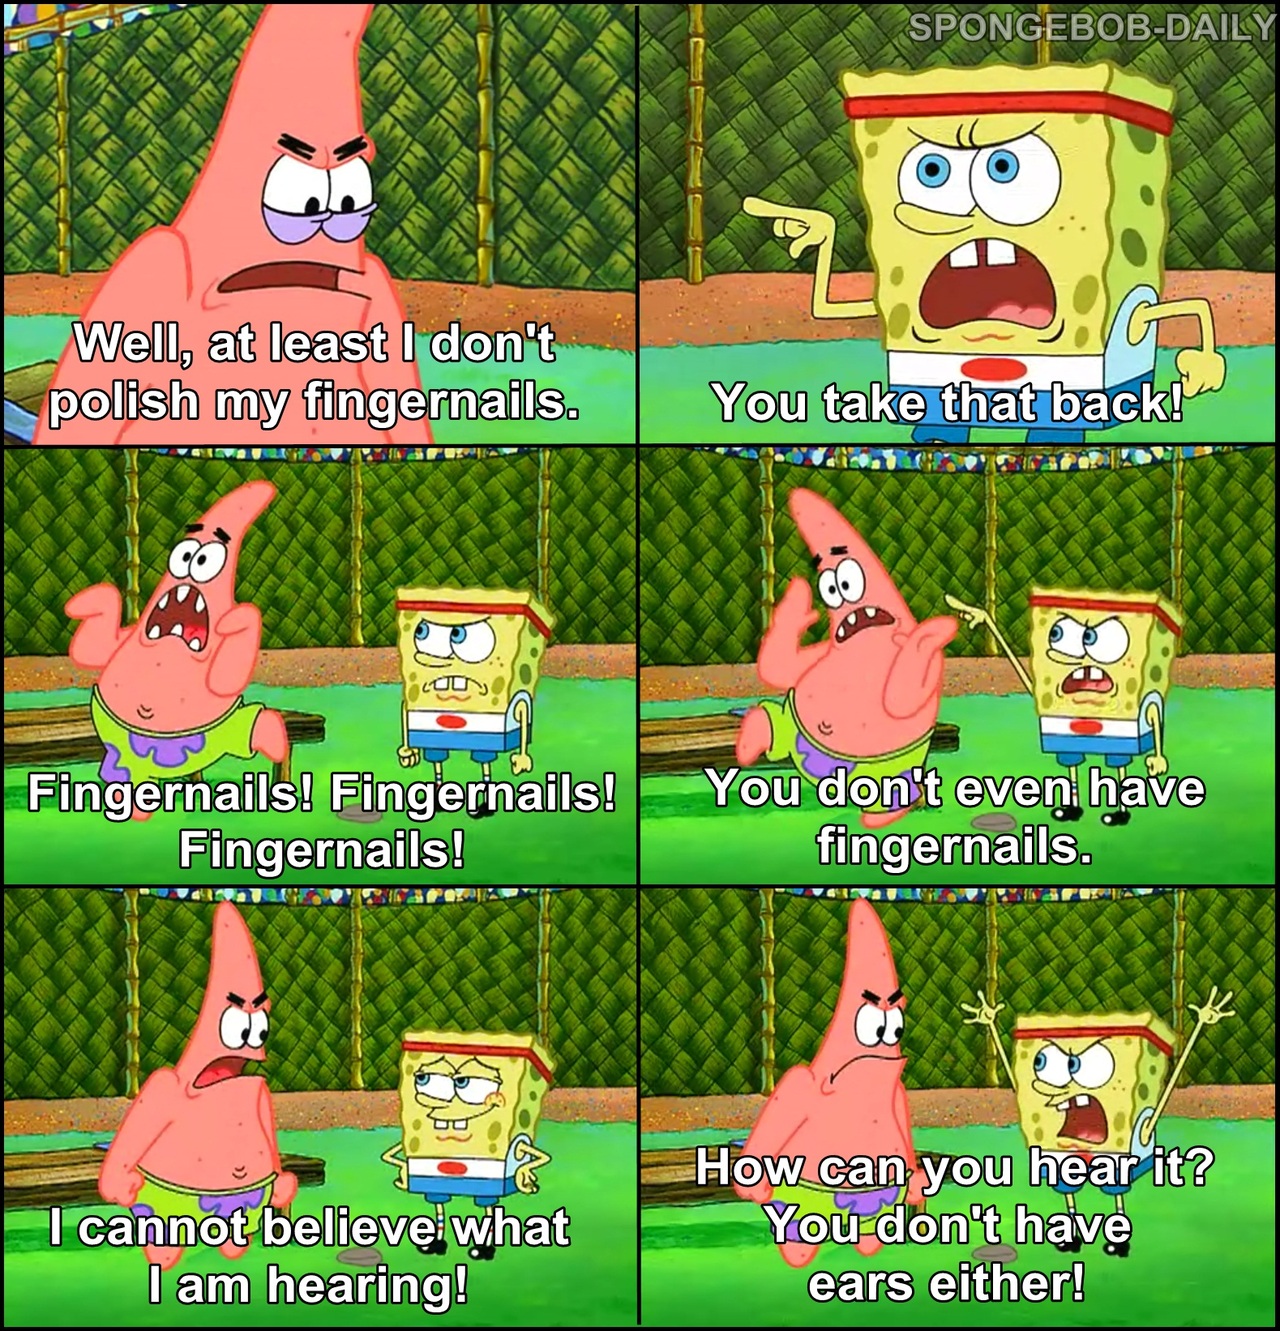 patrick spongebob quotes